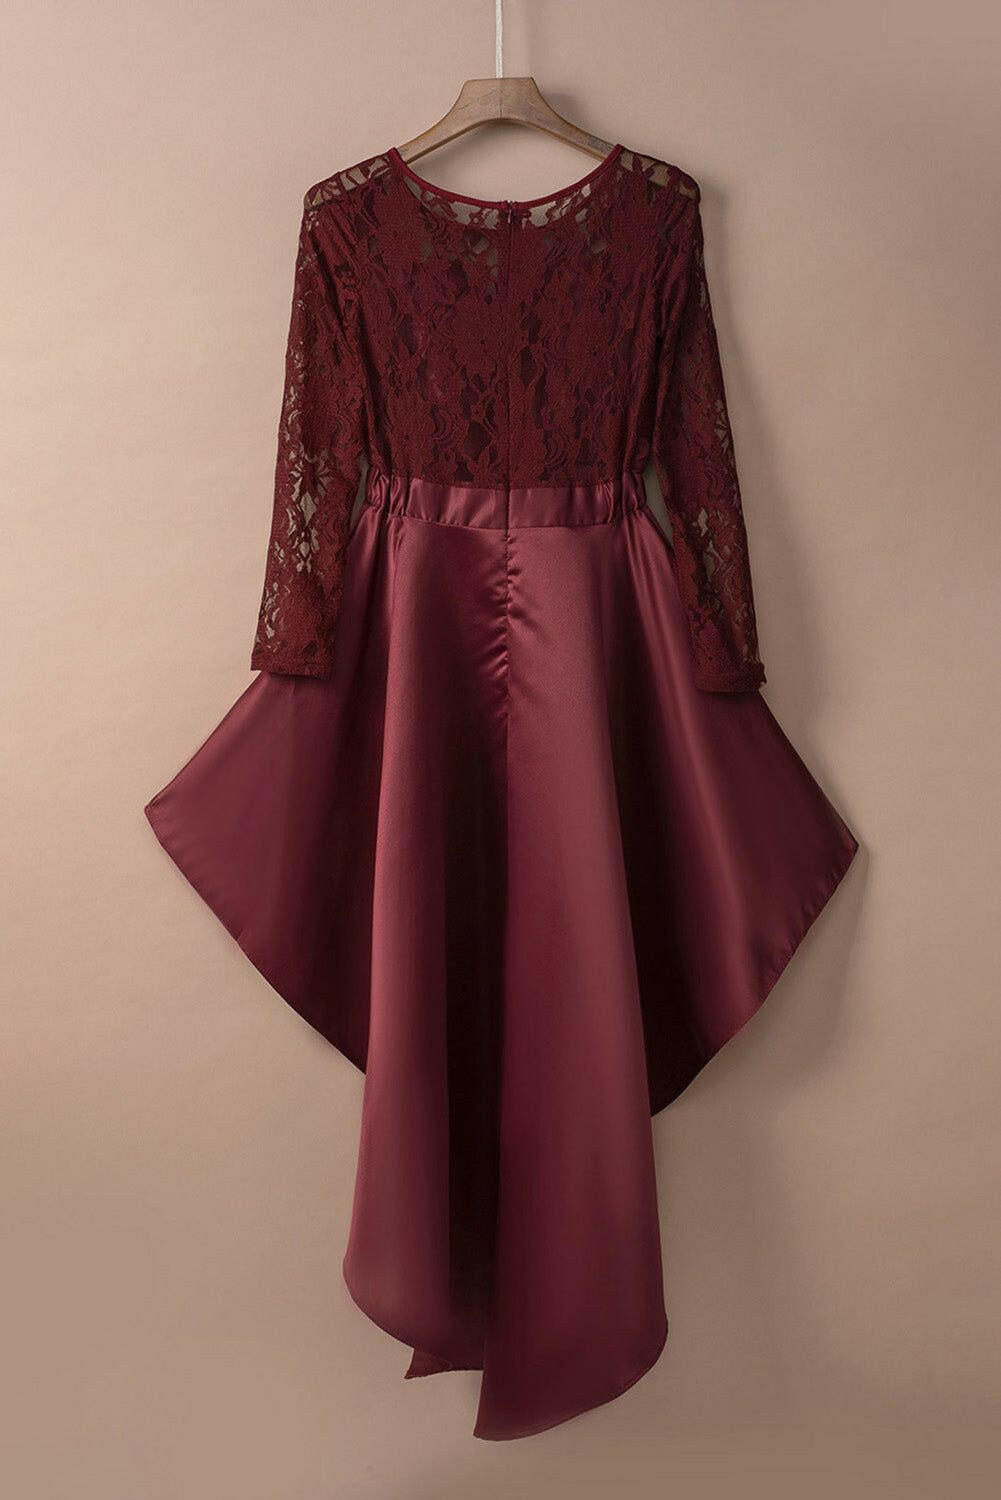 Spliced Lace High-Low Long Sleeve Dress.